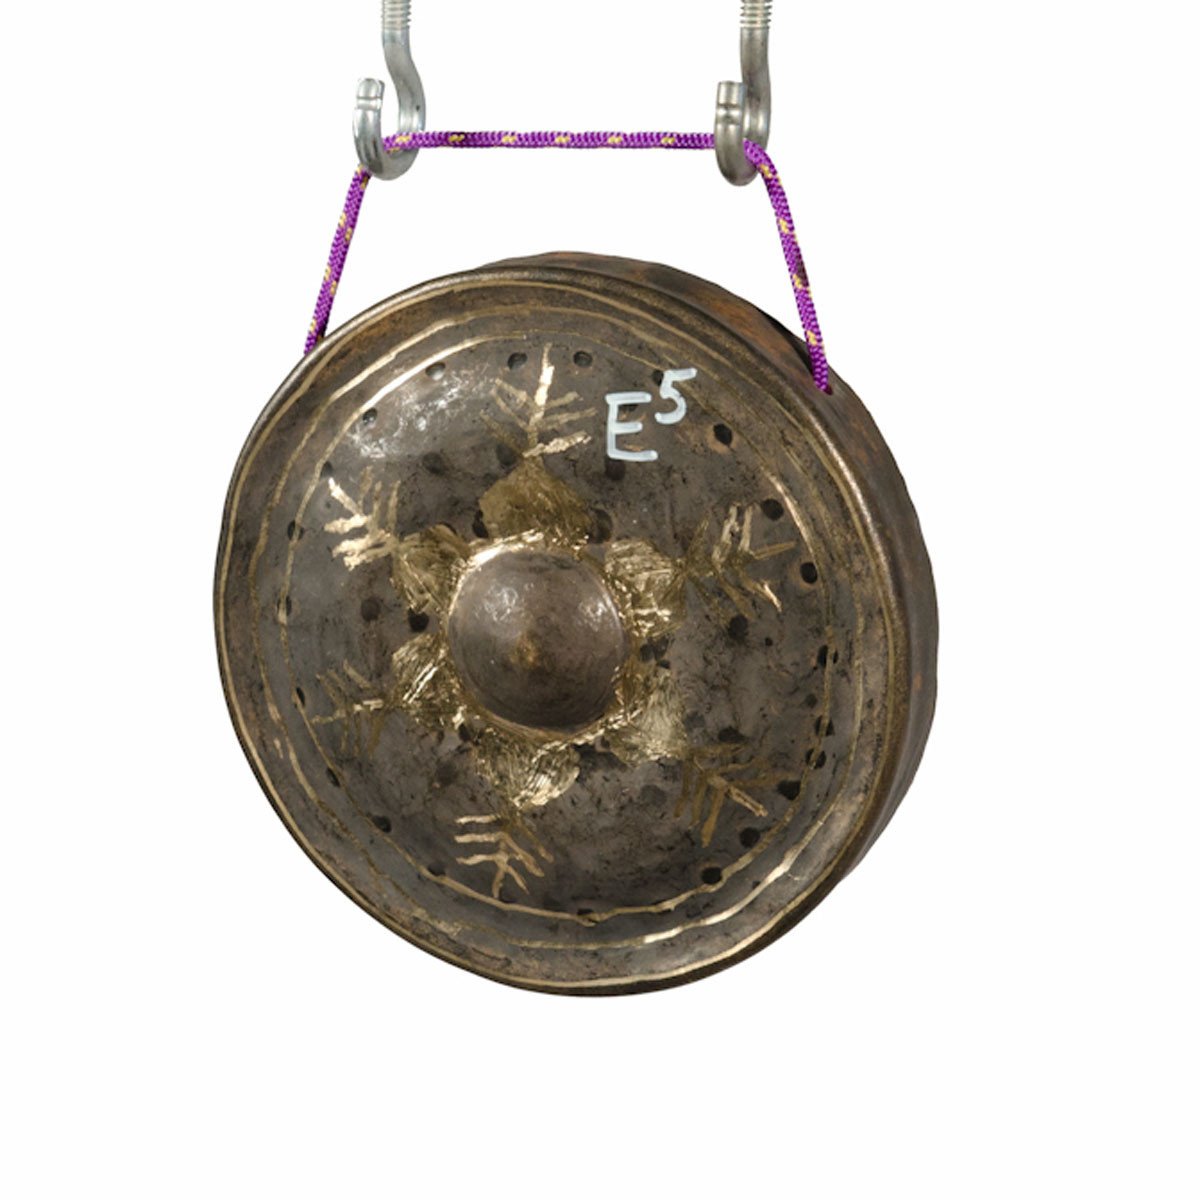 E5 Tuned Thai Gong